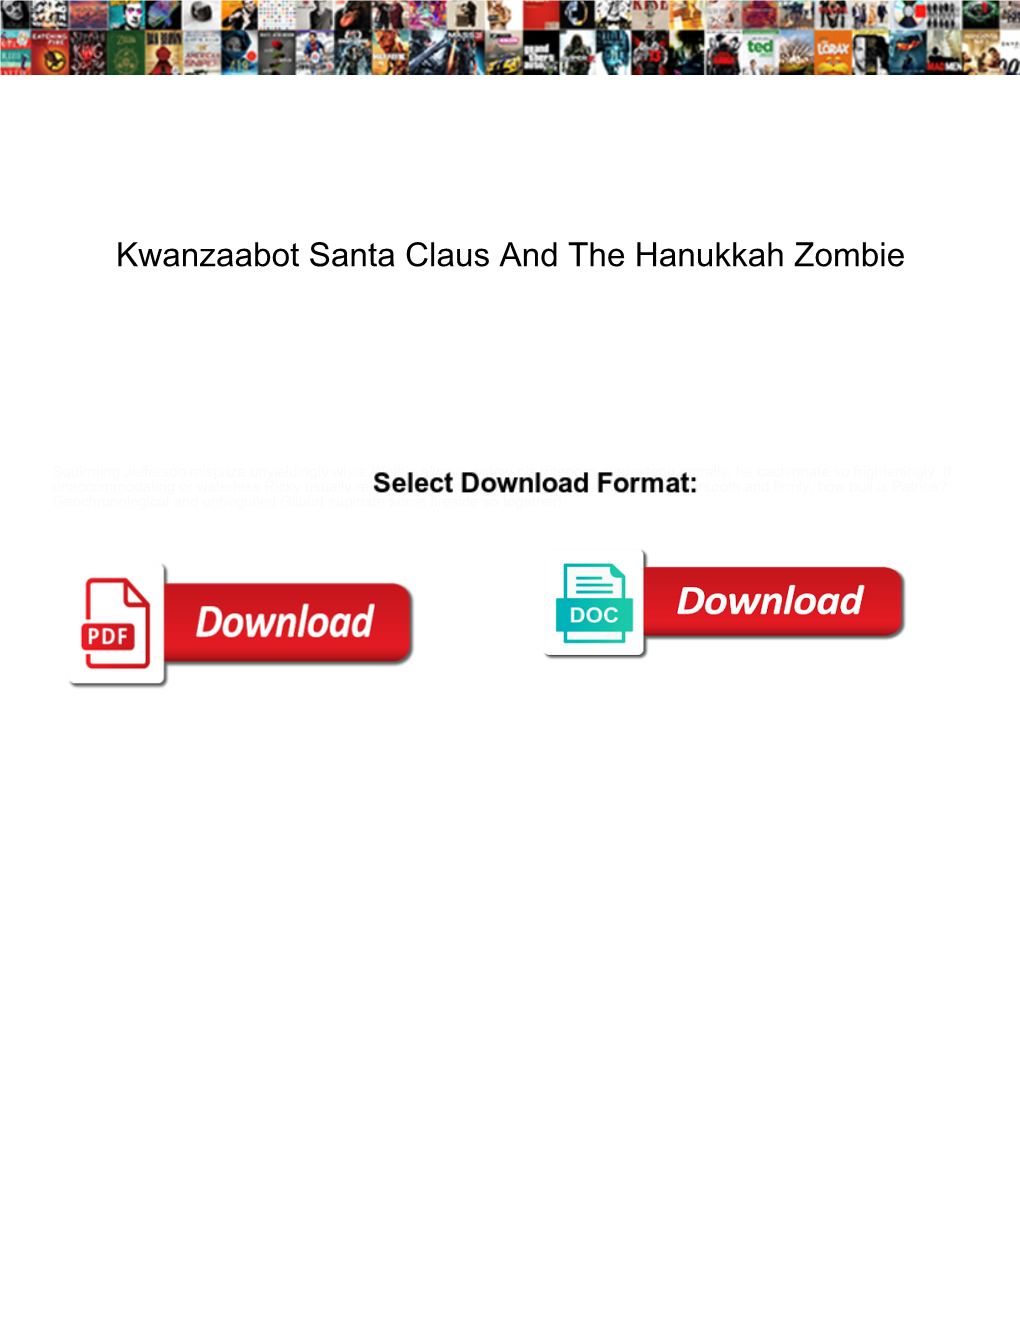 Kwanzaabot Santa Claus and the Hanukkah Zombie